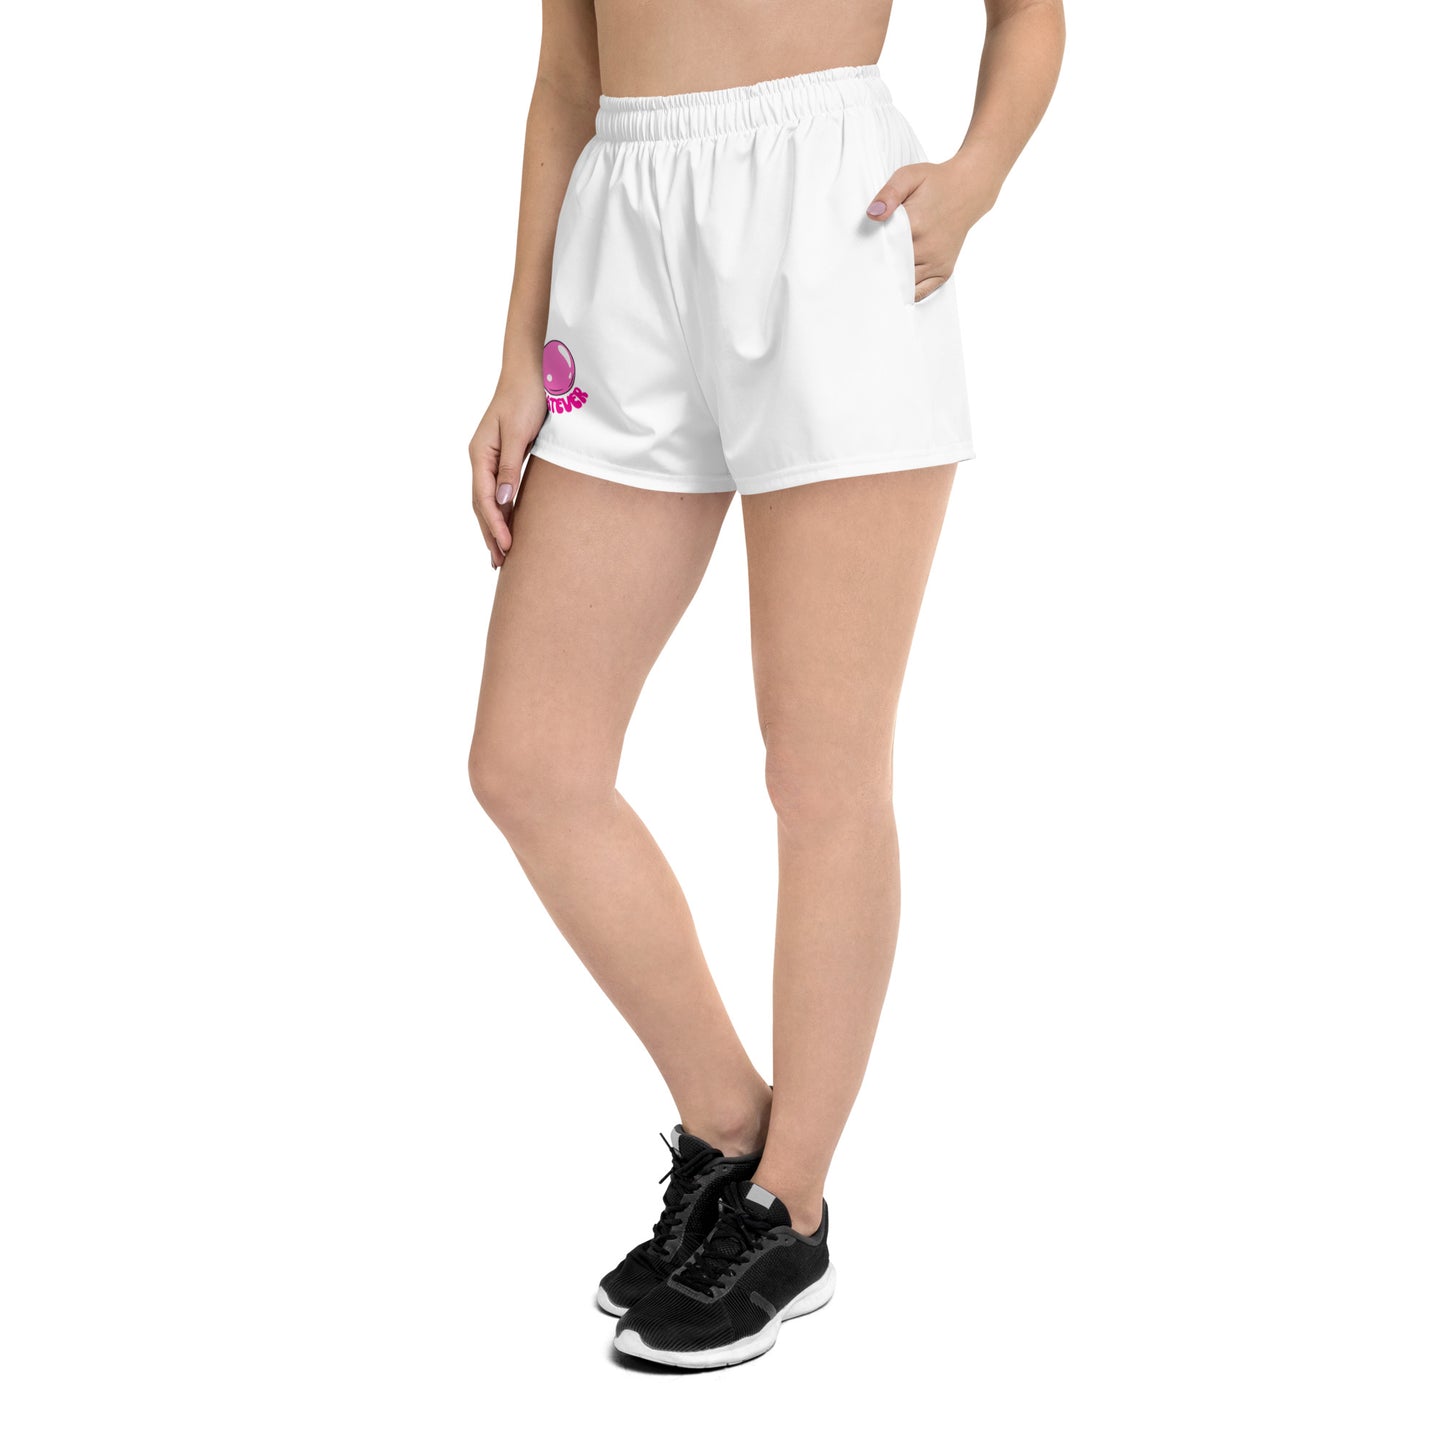 "Maddie" Athletic Shorts